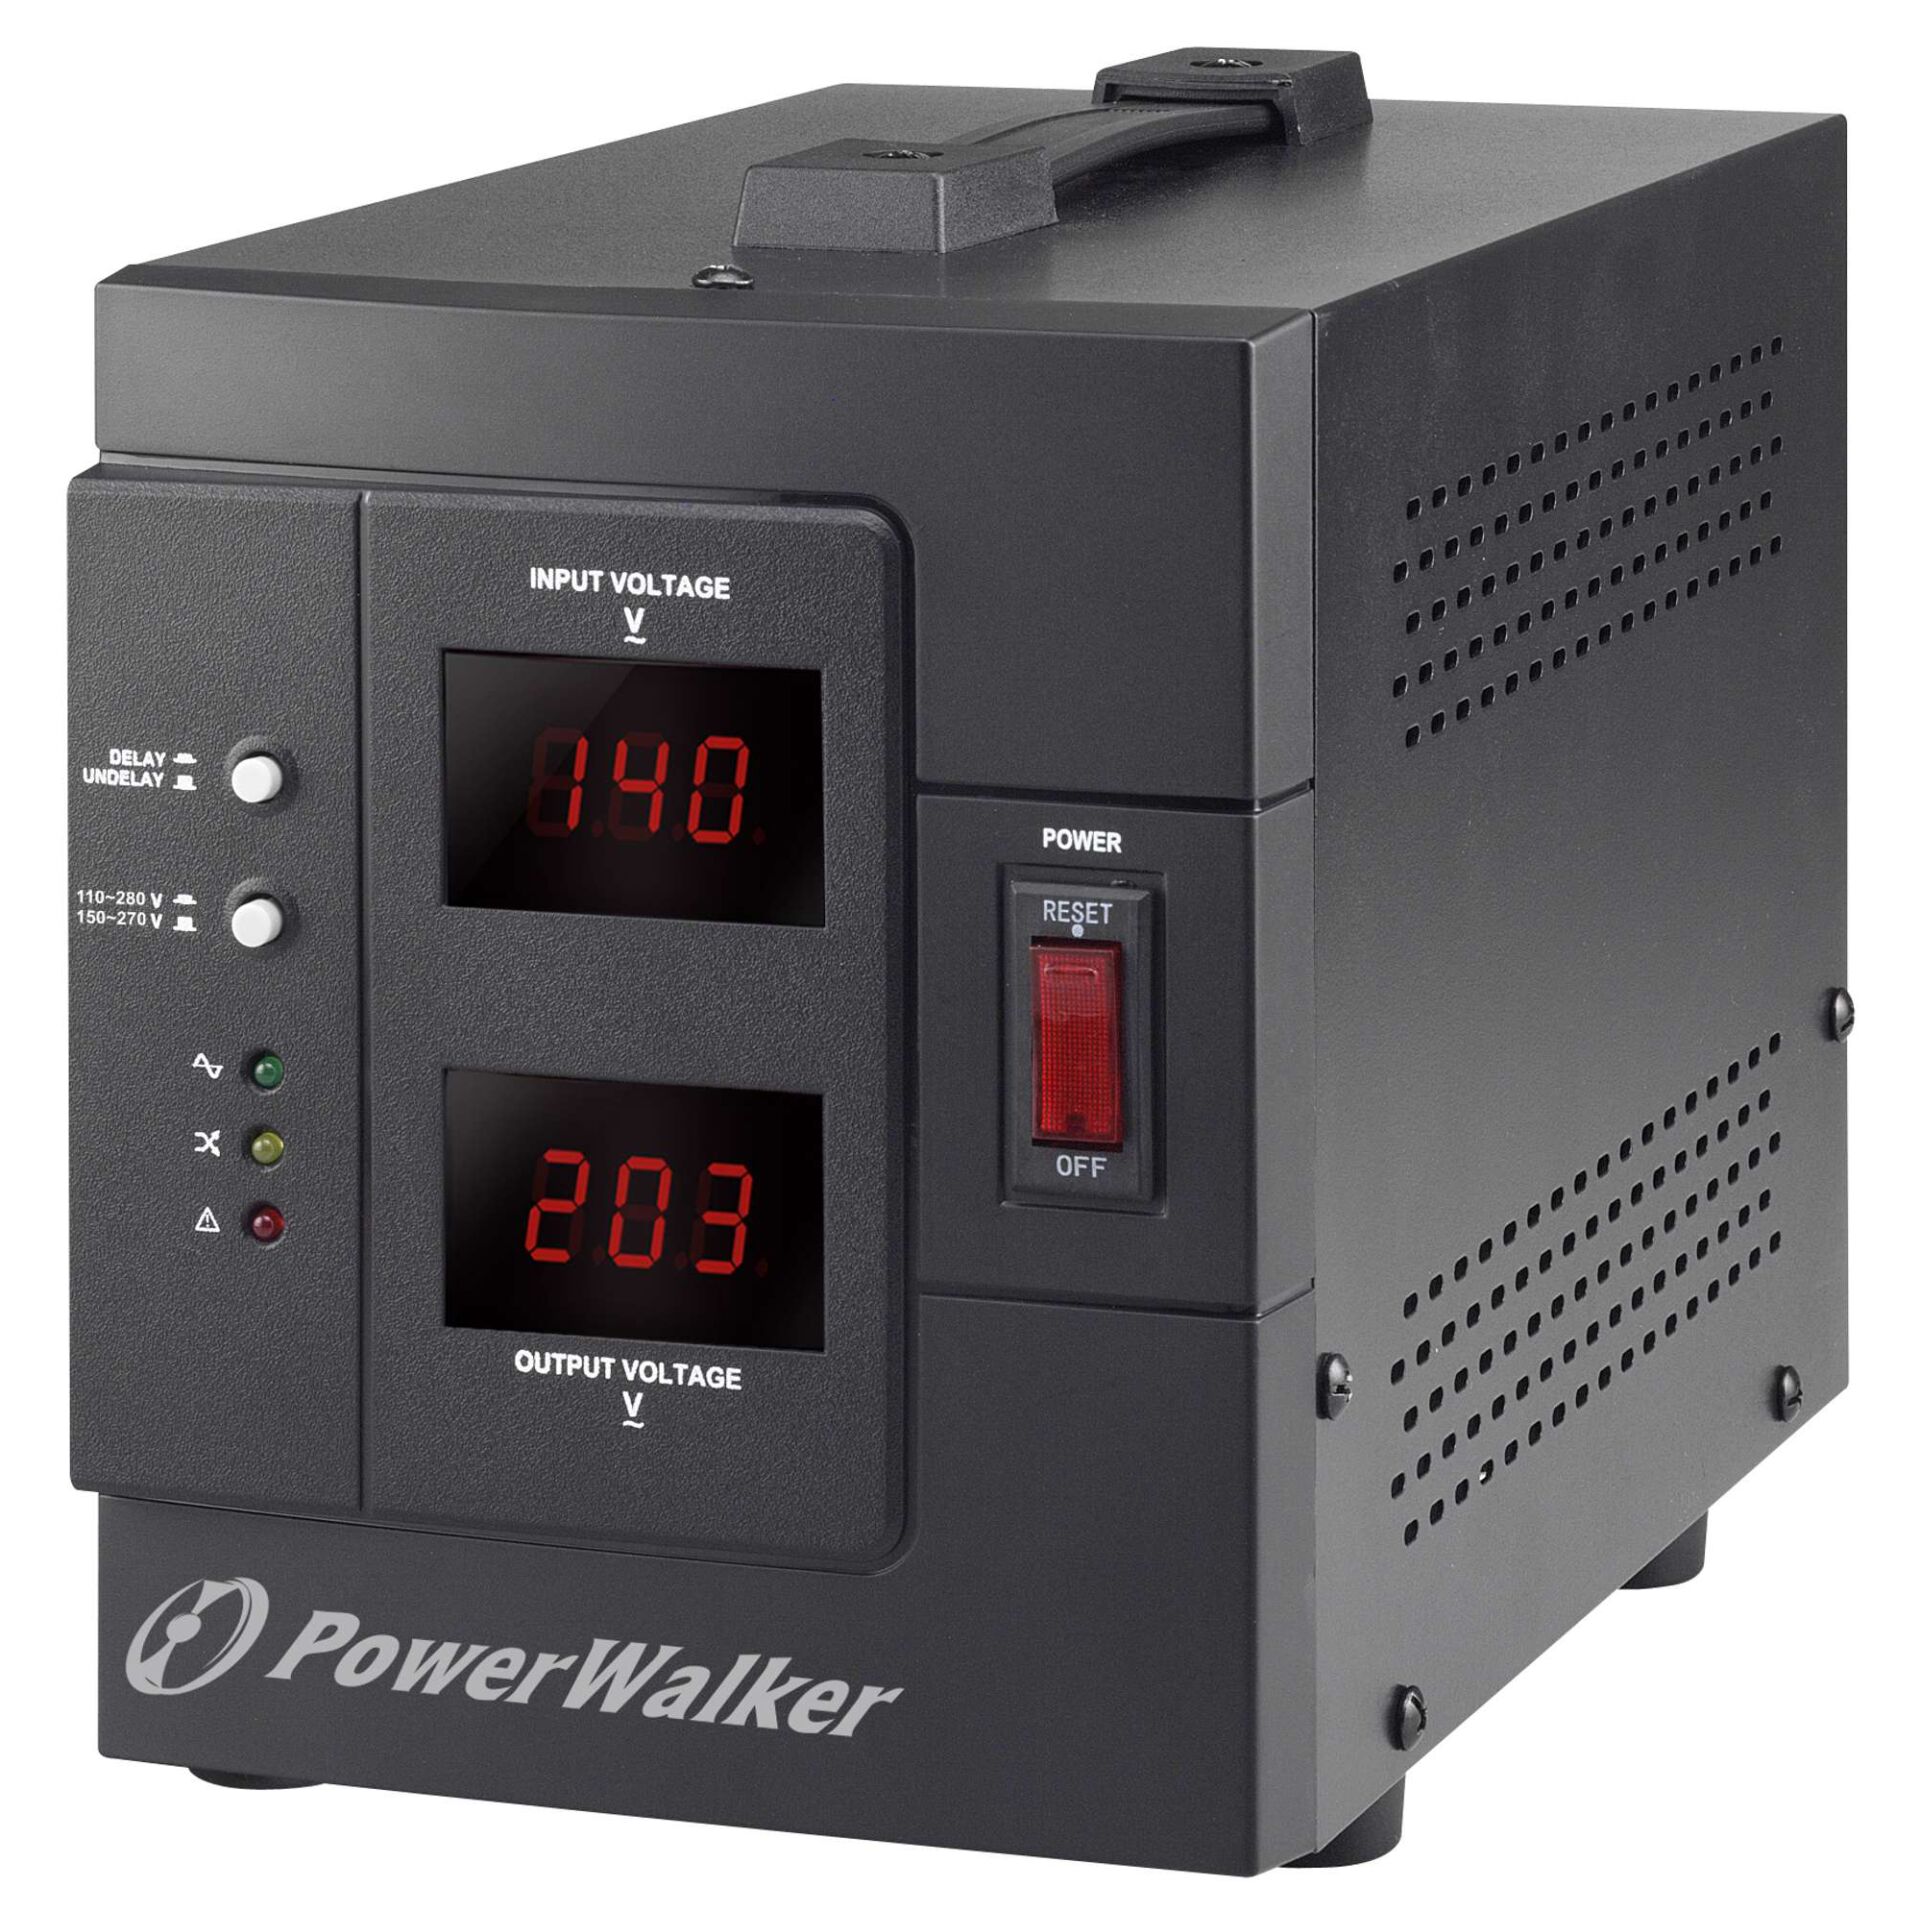 PowerWalker AVR 1500 SIV FR automatic voltage regulator